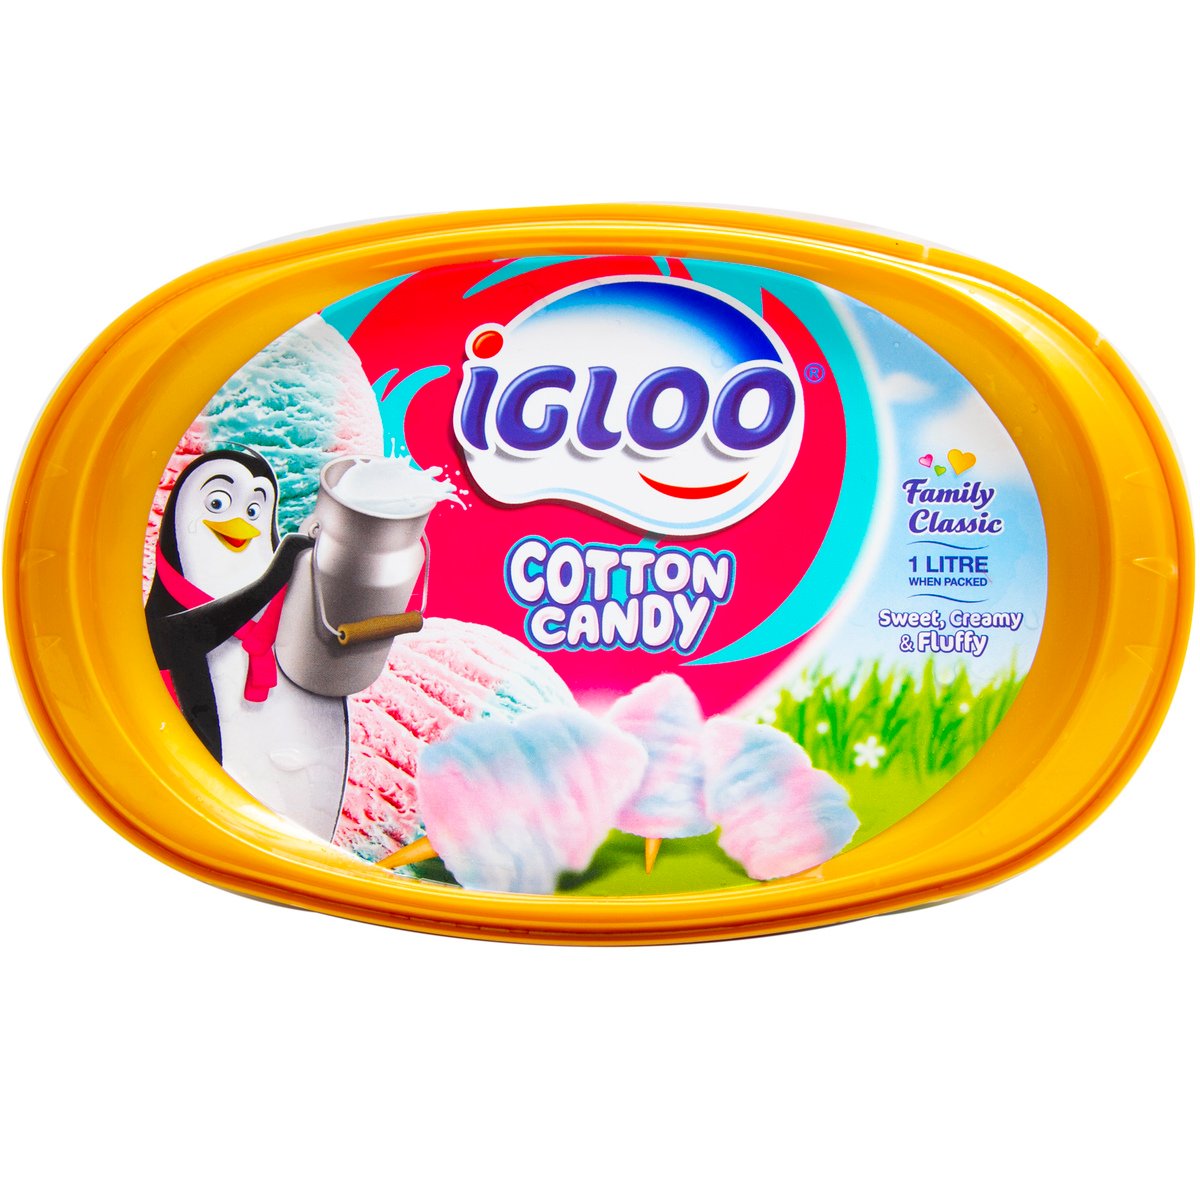 Igloo Cotton Candy Ice Cream 1 Litre